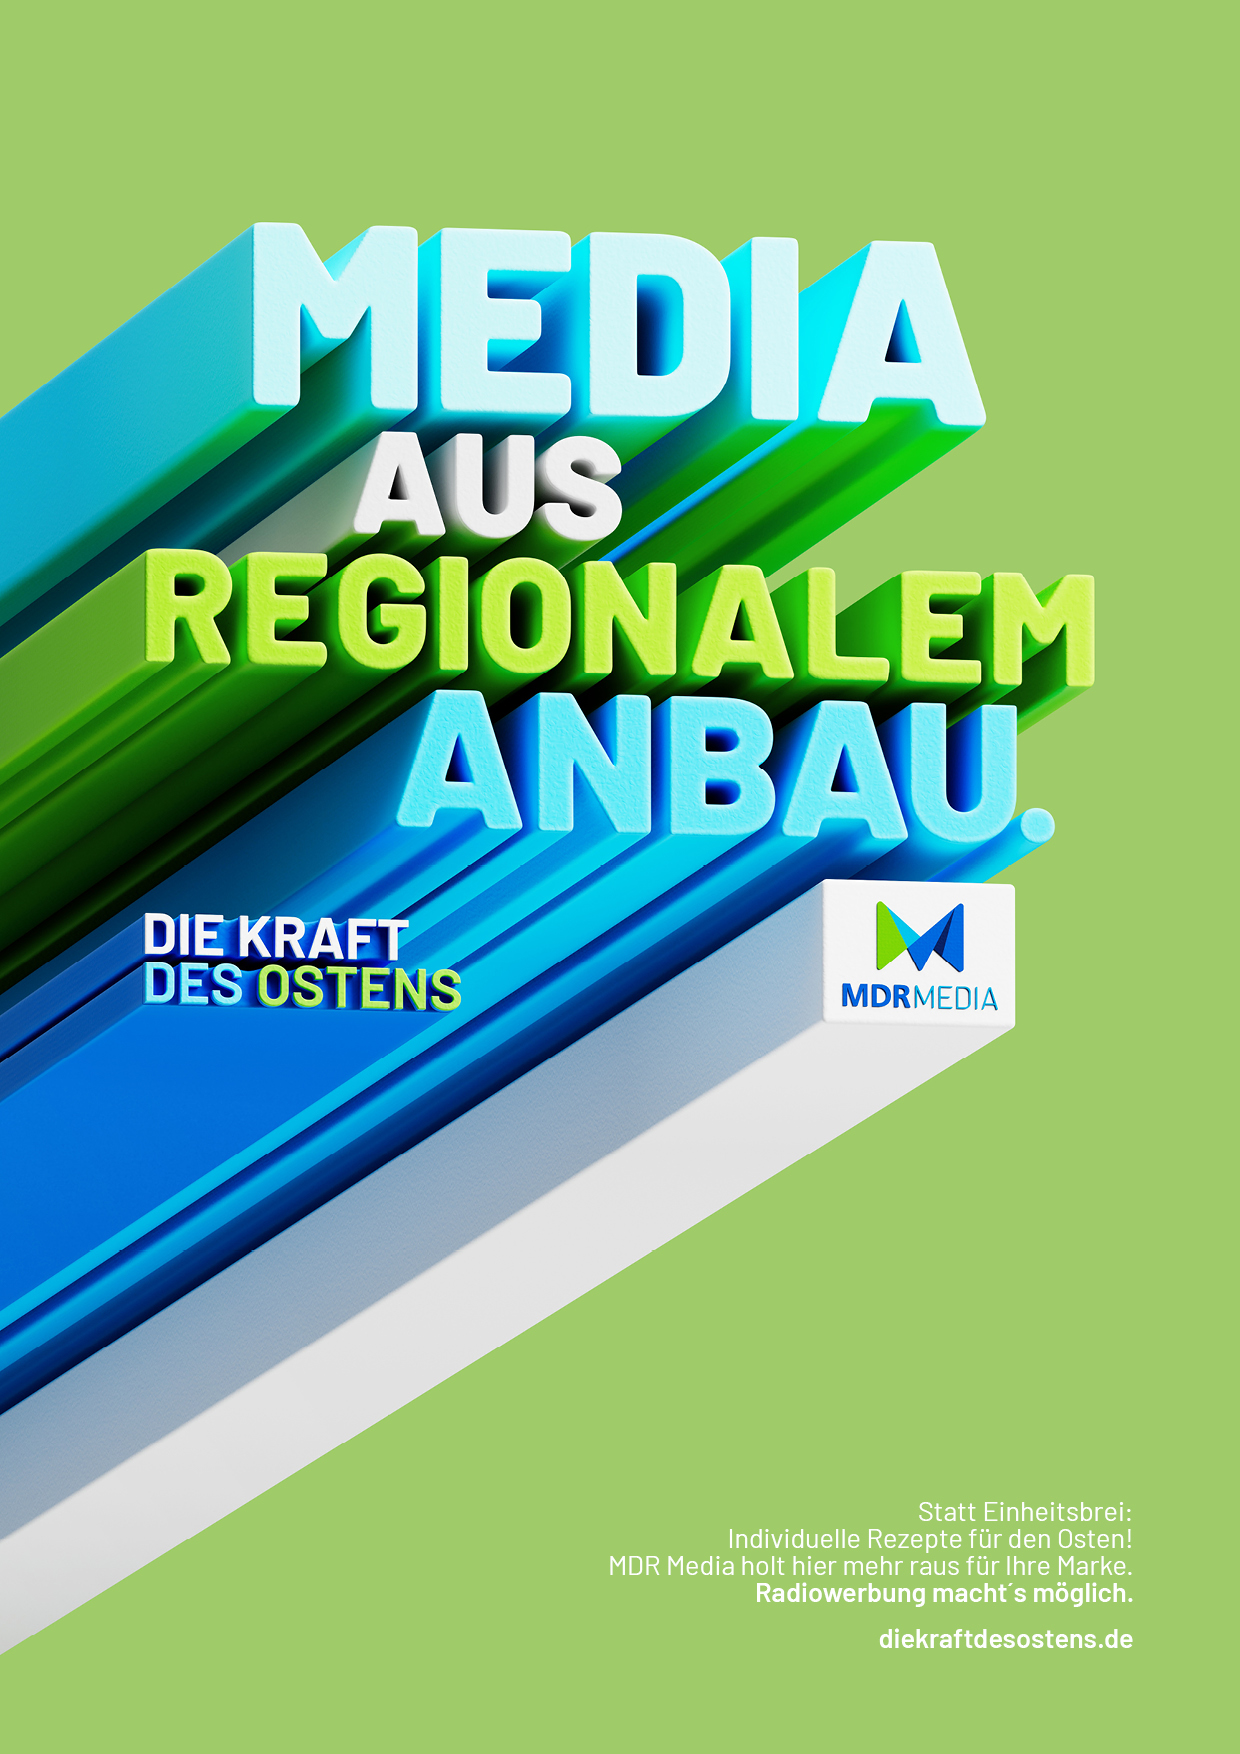 MDR Media - Media aus regionalem Anbau. Die Kraft des Ostens